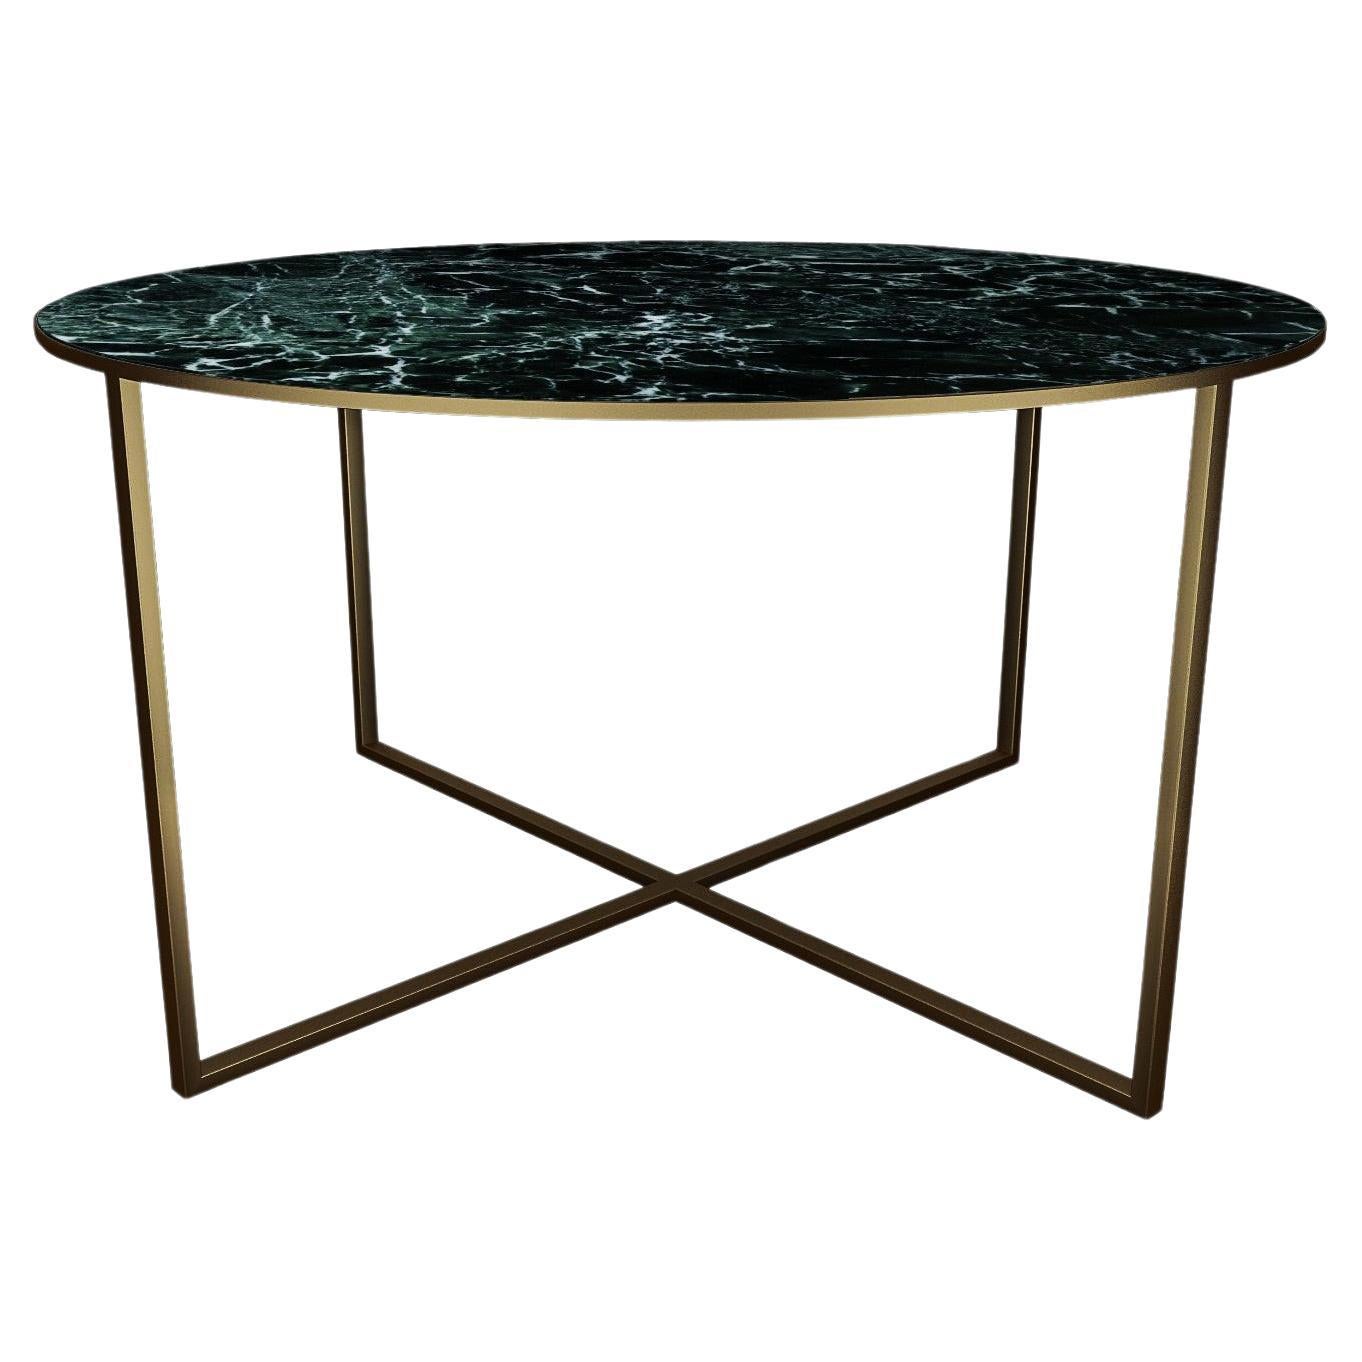 NORDST MIA Dining Table, Italian Green Lightning Marble, Danish Modern Design For Sale